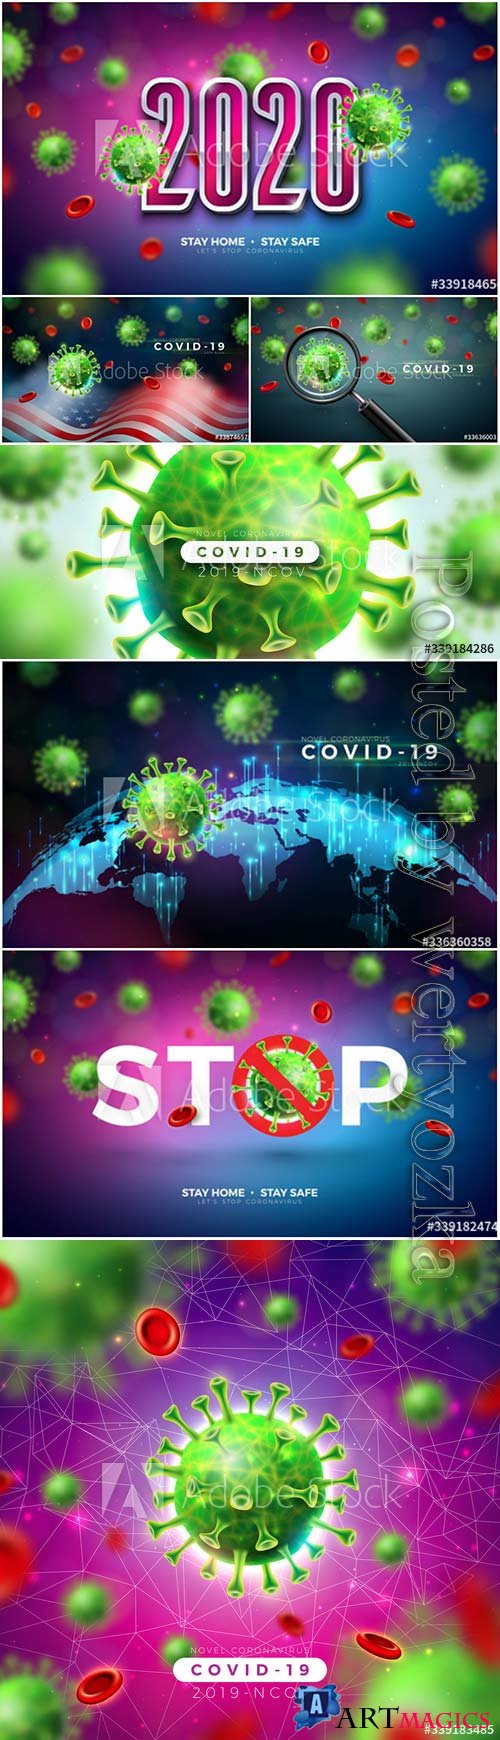 Stay home, stop coronavirus vector design